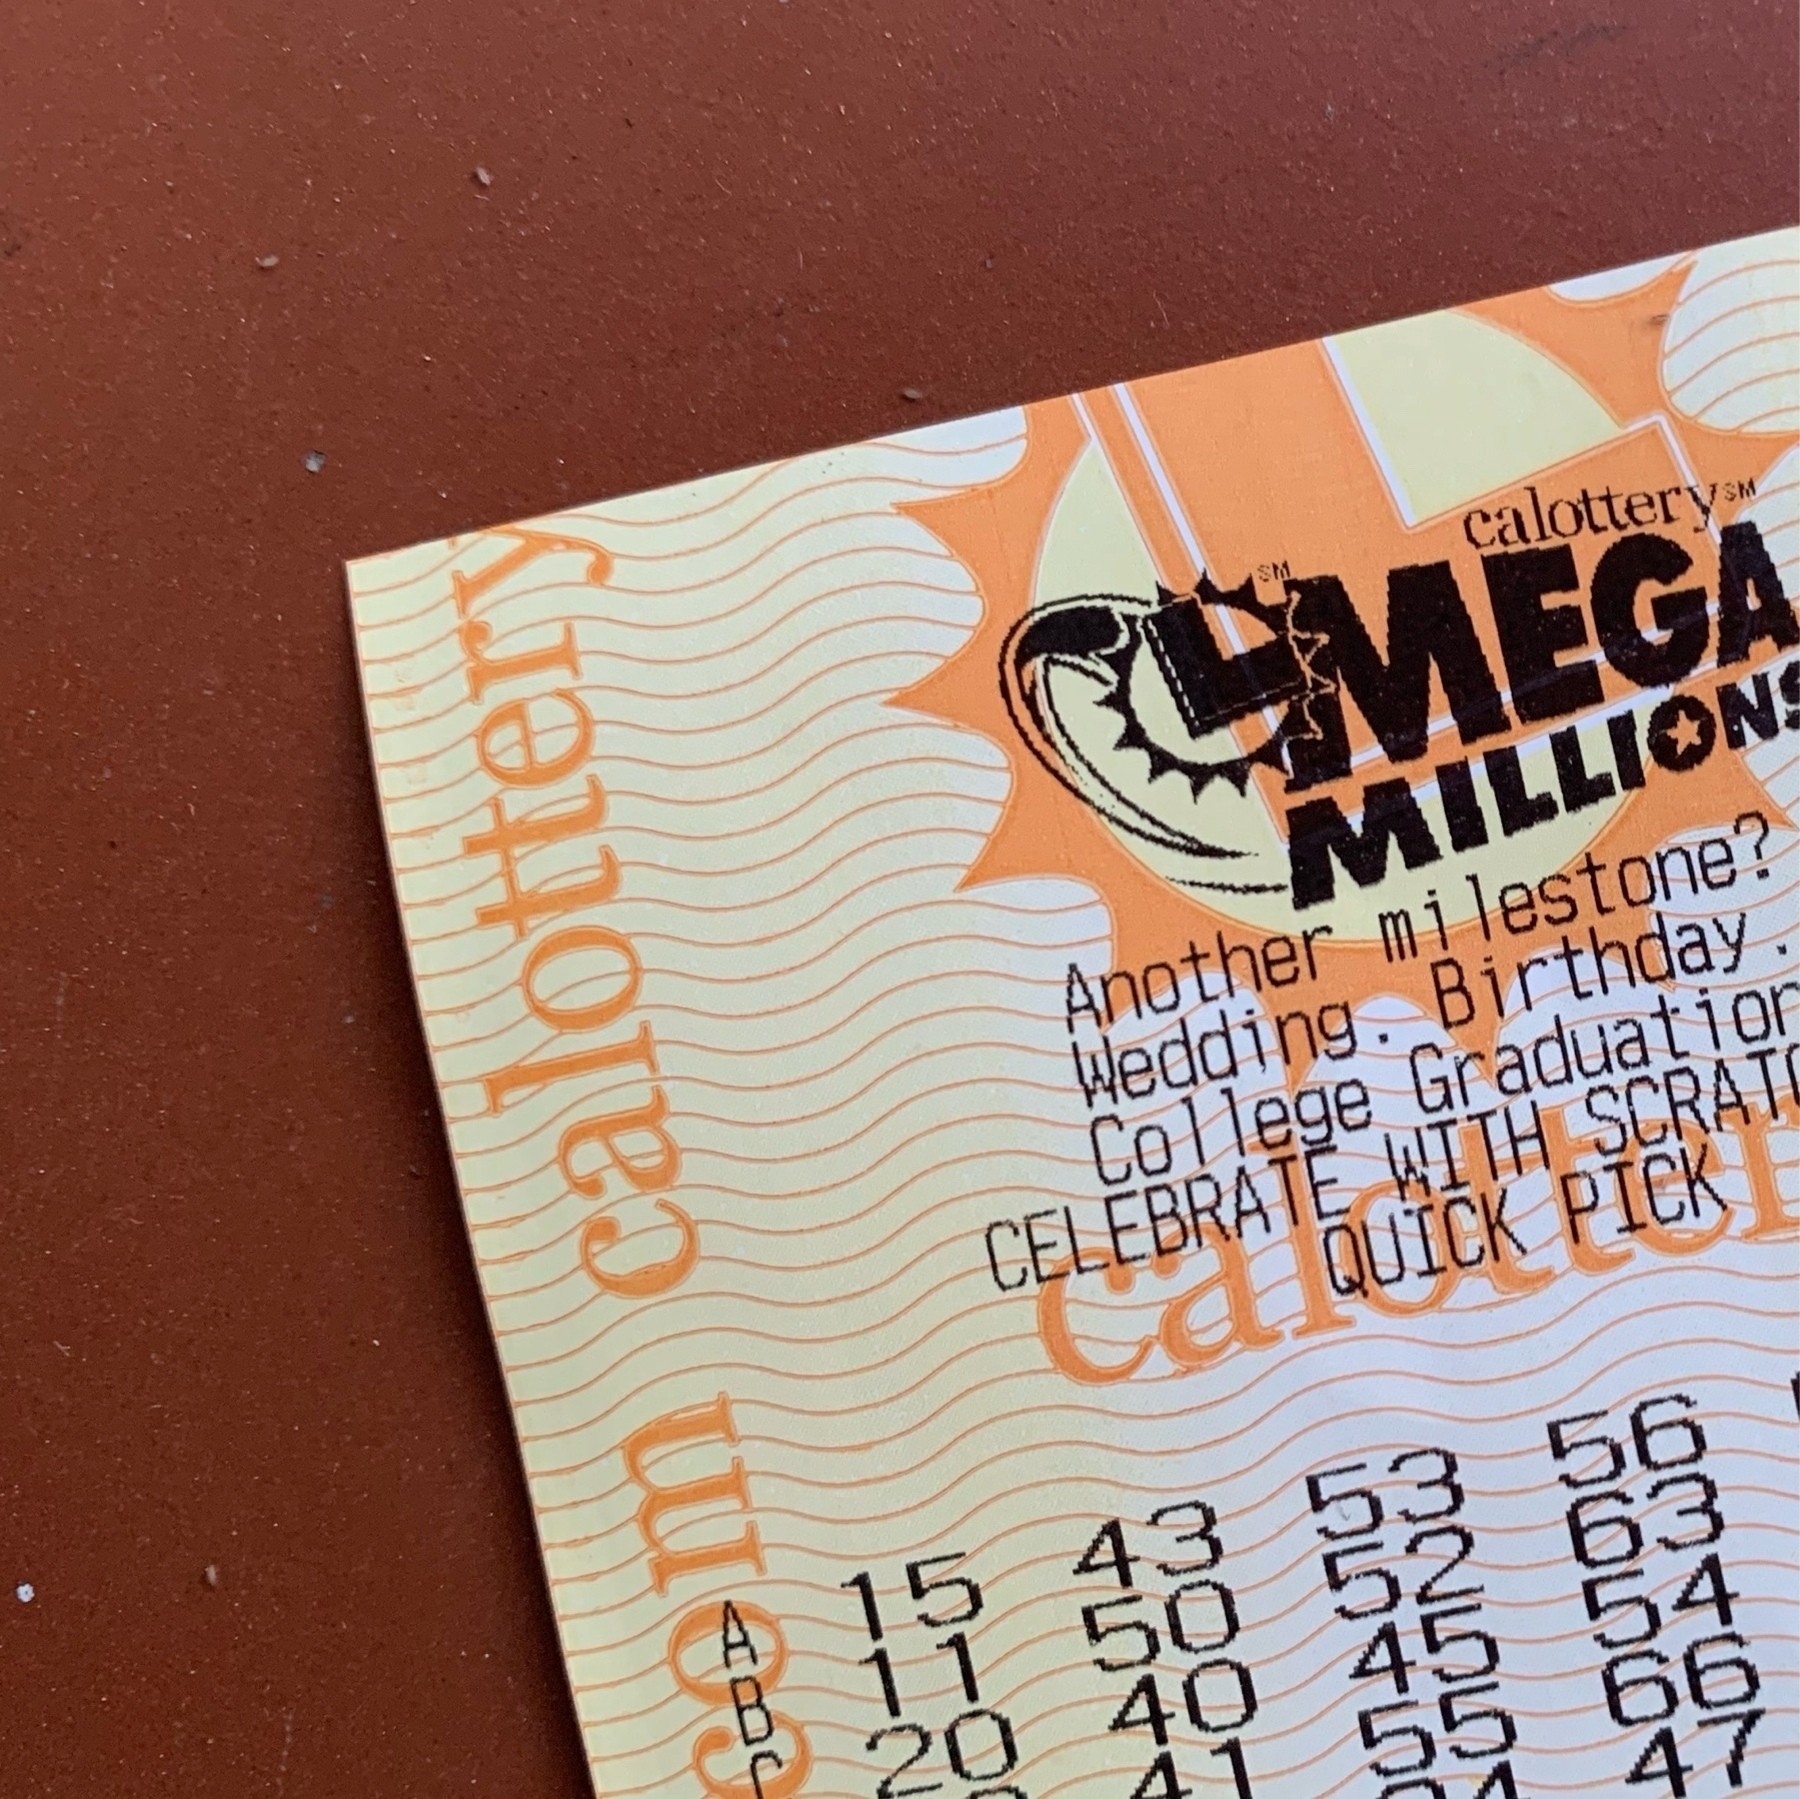 A winning Mega Millions lottery ticket